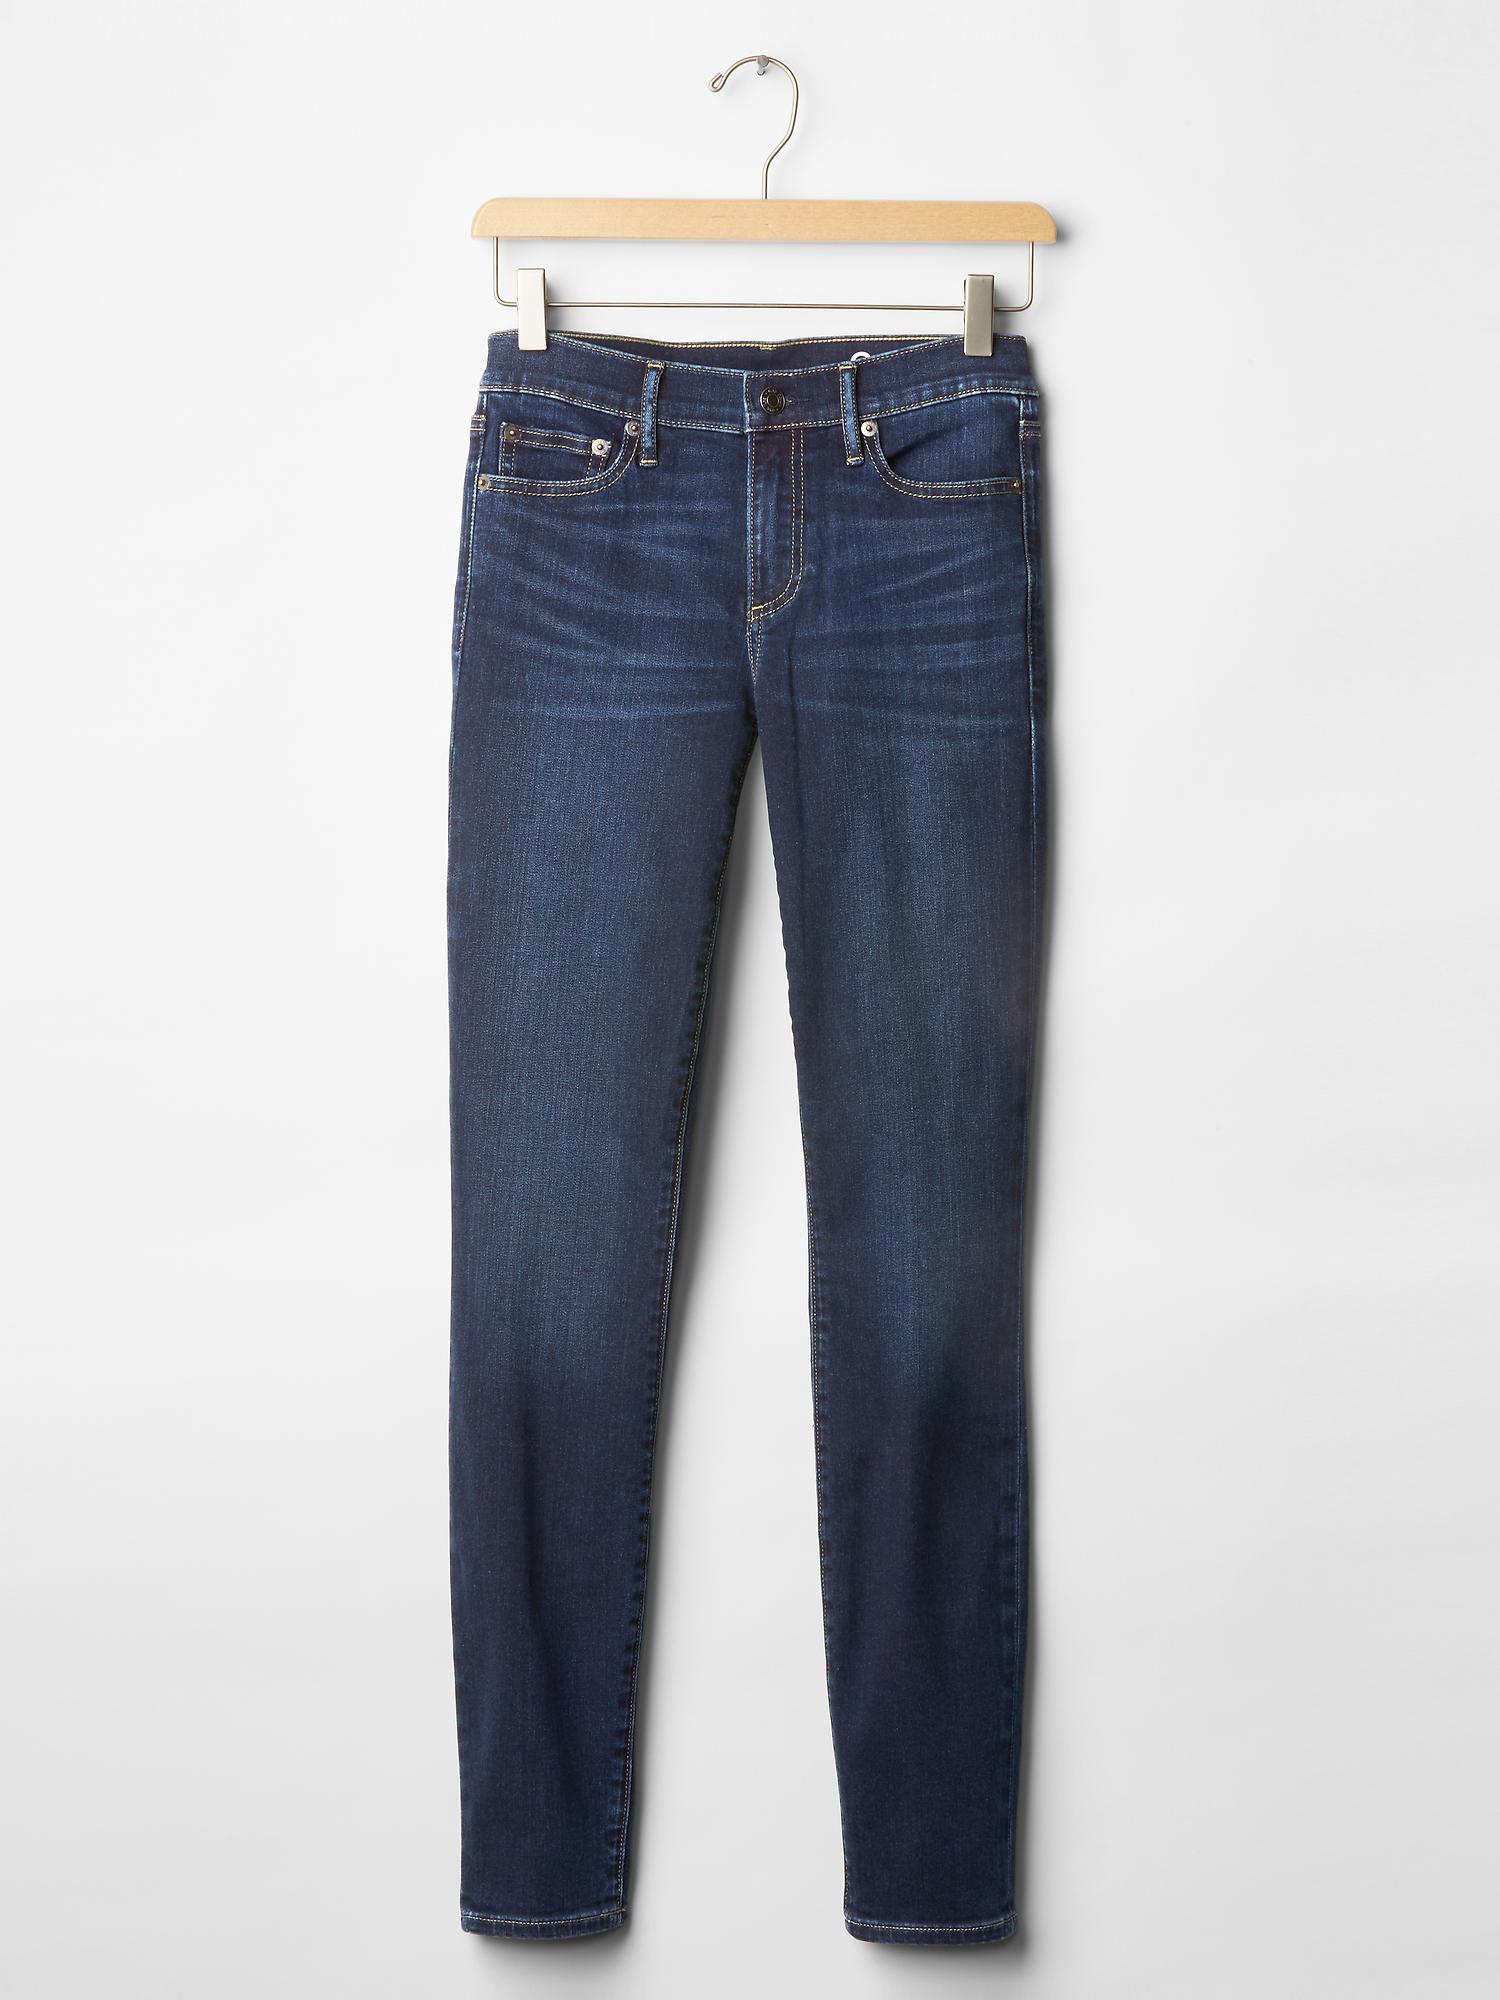 1969 resolution legging jean